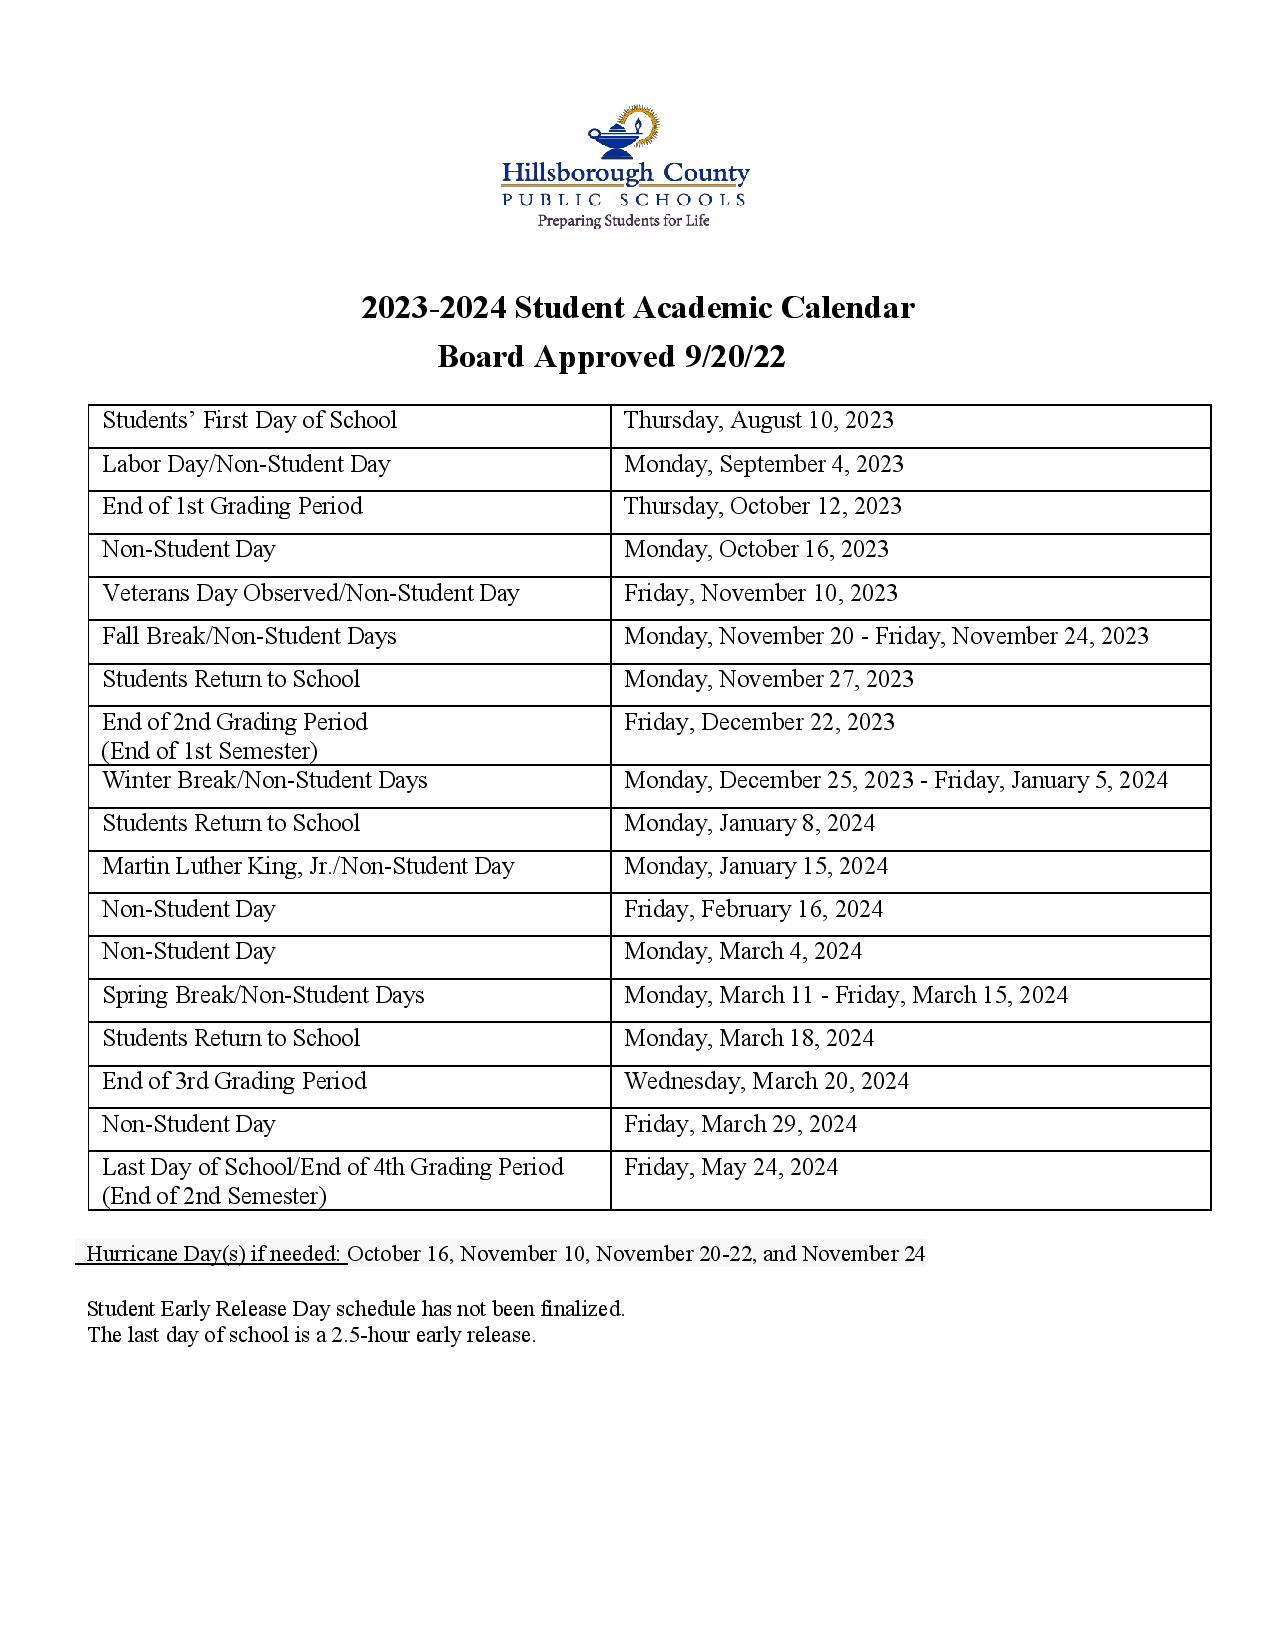 Hillsborough County Public Schools Calendar Holidays 2023 2024